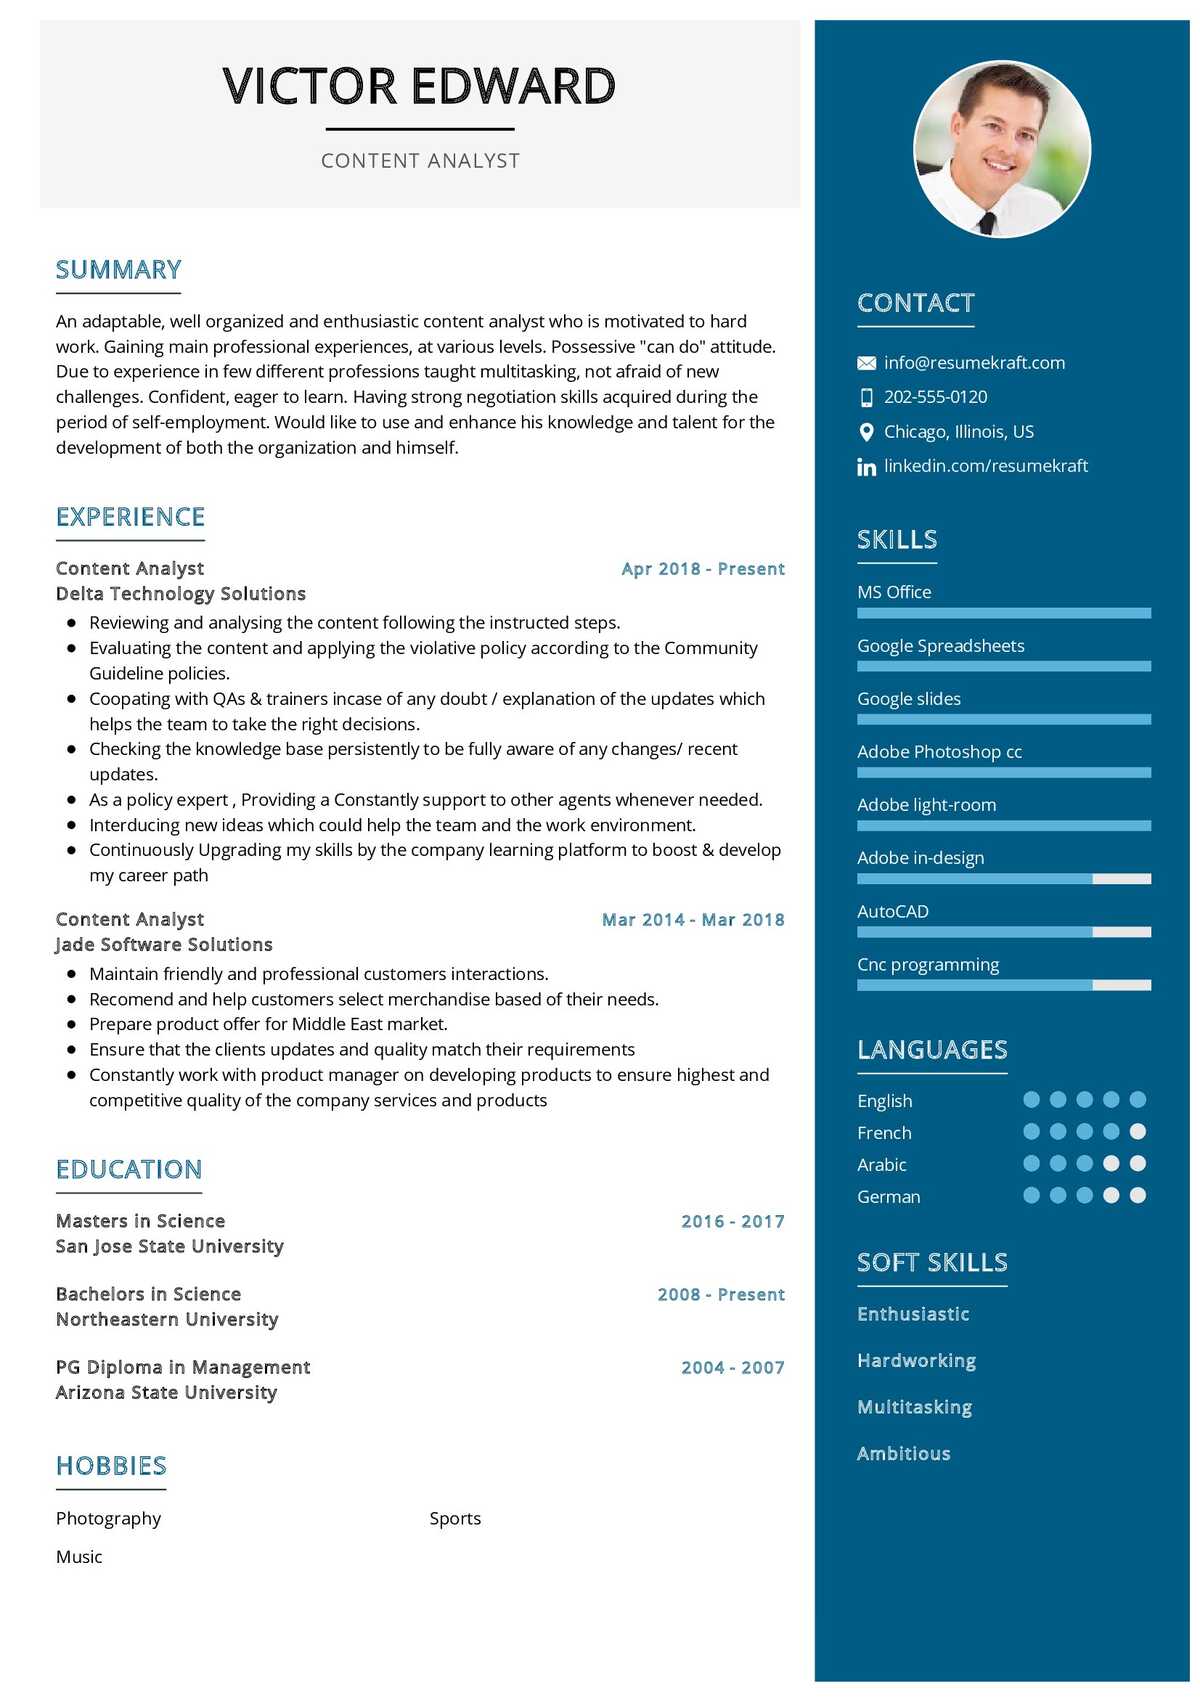 Content Analyst Resume Example 2021 | Writing Tips - ResumeKraft